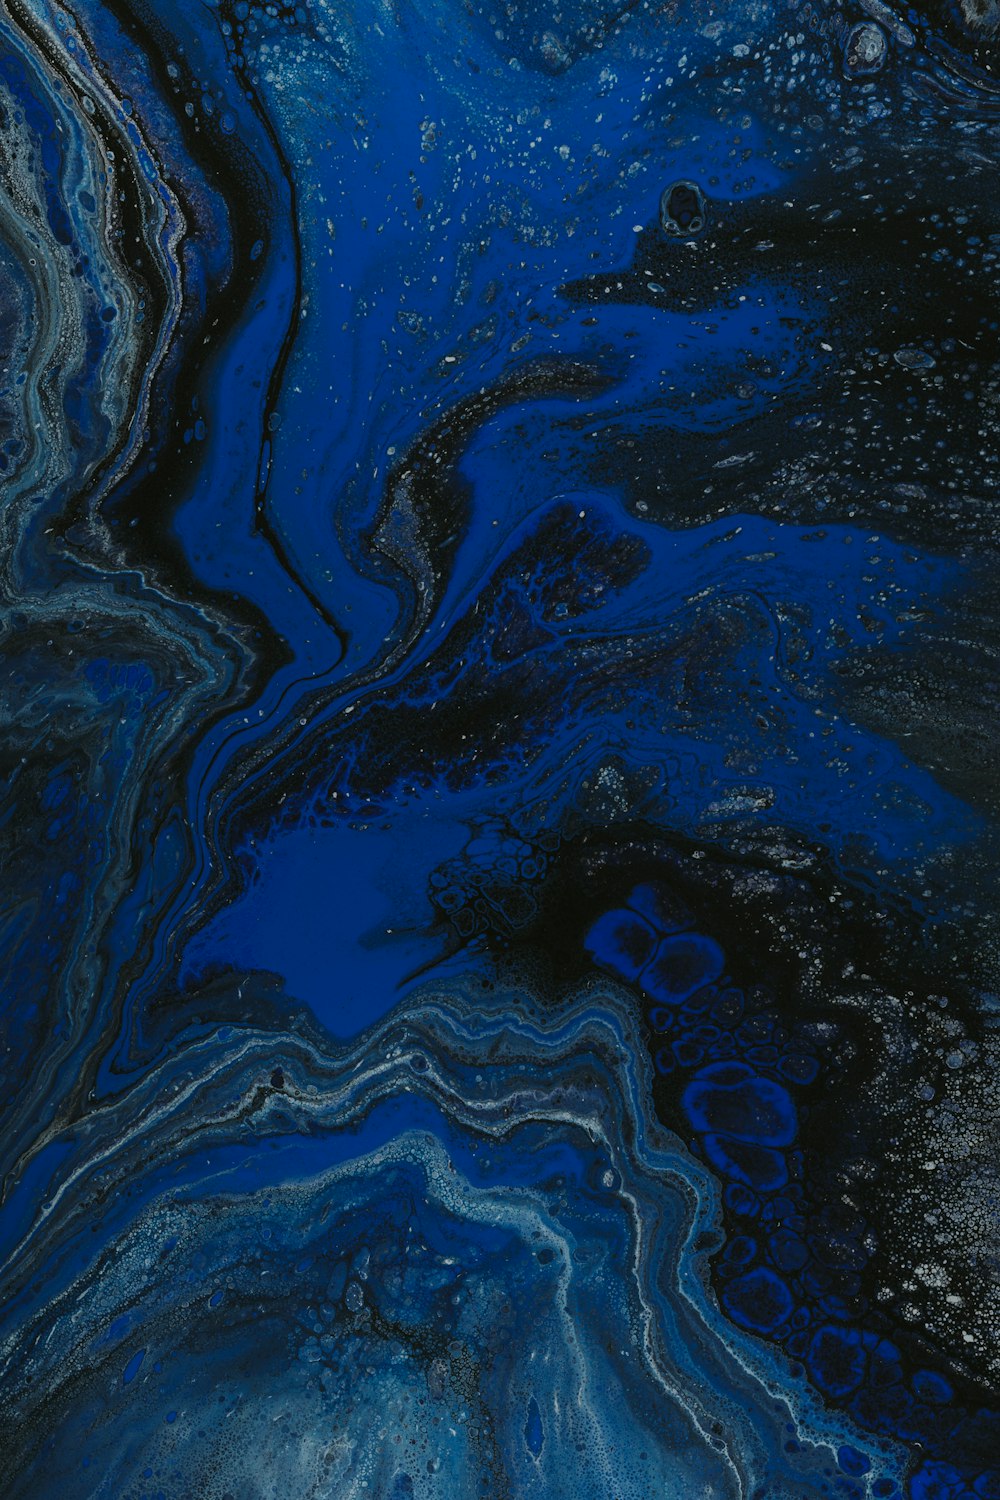 a close up of a blue and black liquid